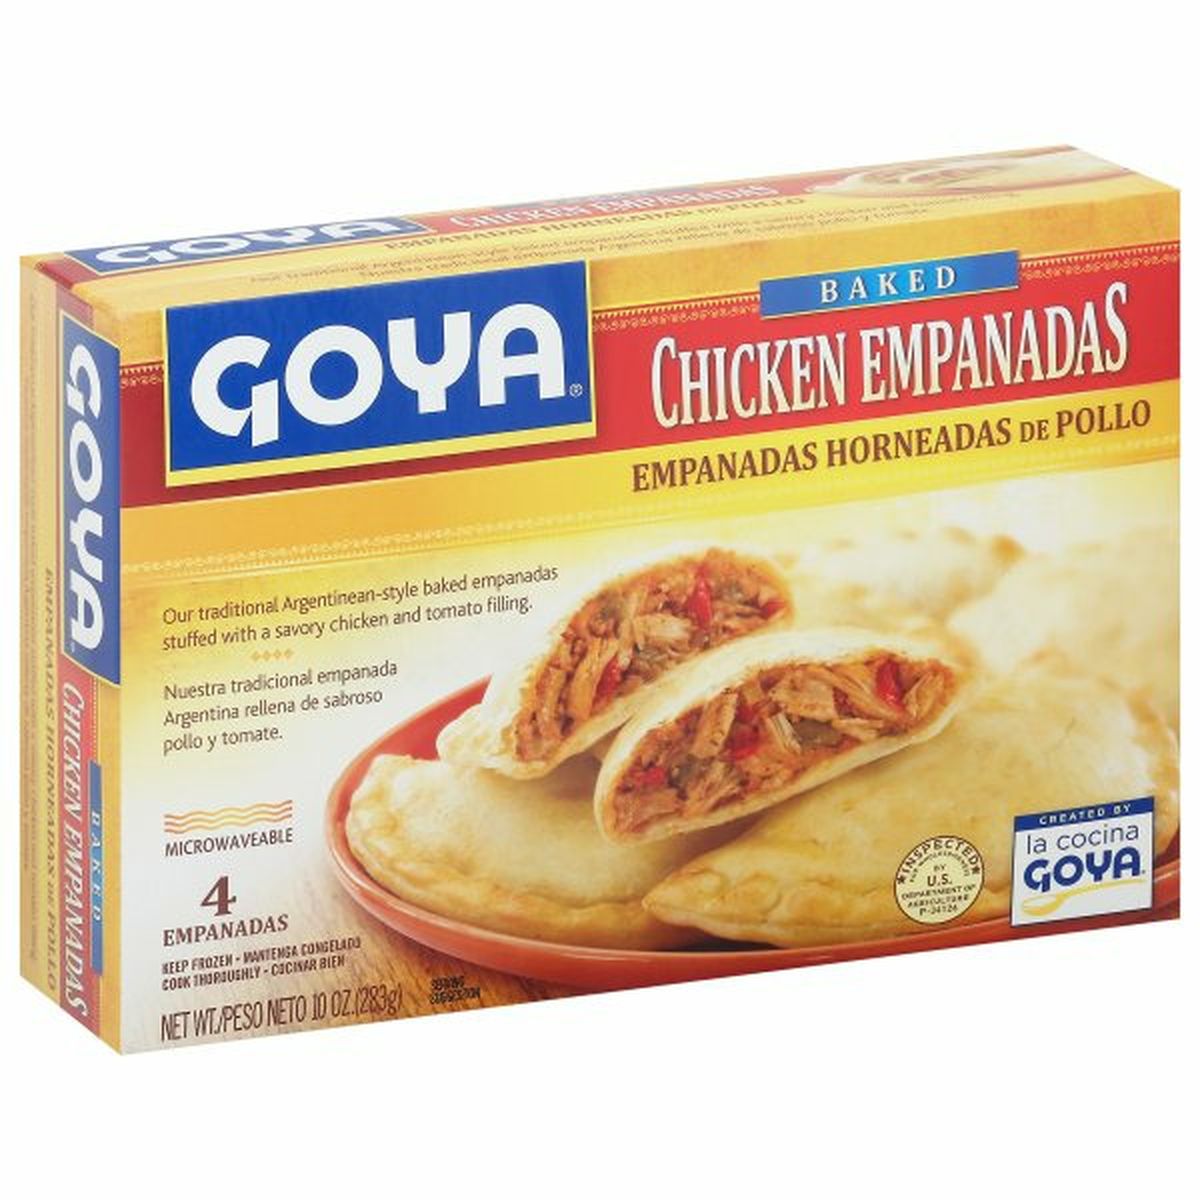 Calories in Goya Empanadas, Baked, Chicken